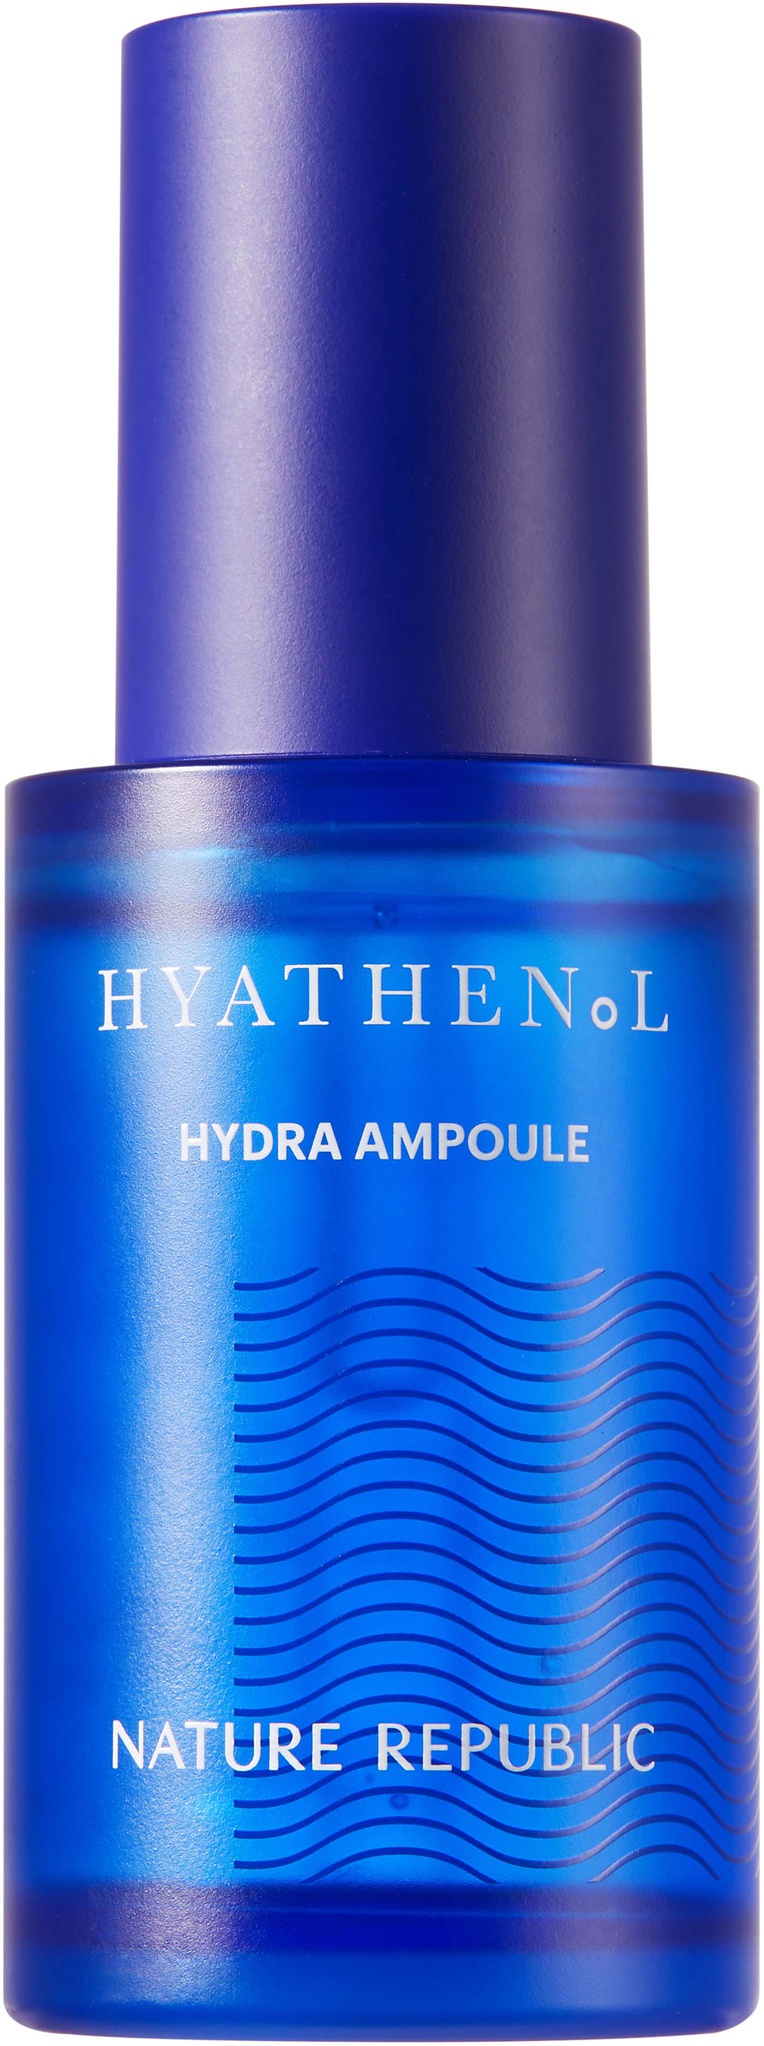 Nature Republic Hyathenol Hydra Ampoule